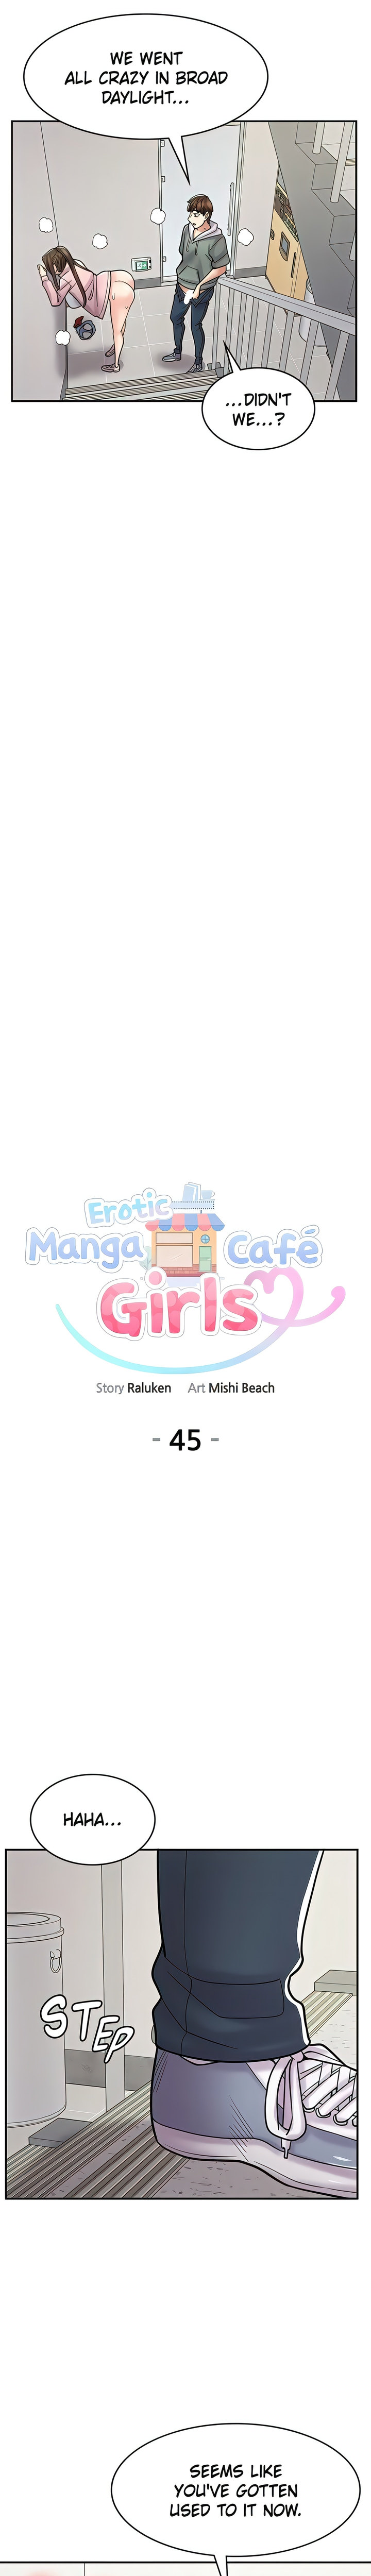 Erotic Manga Café Girls - Chapter 45 Page 11